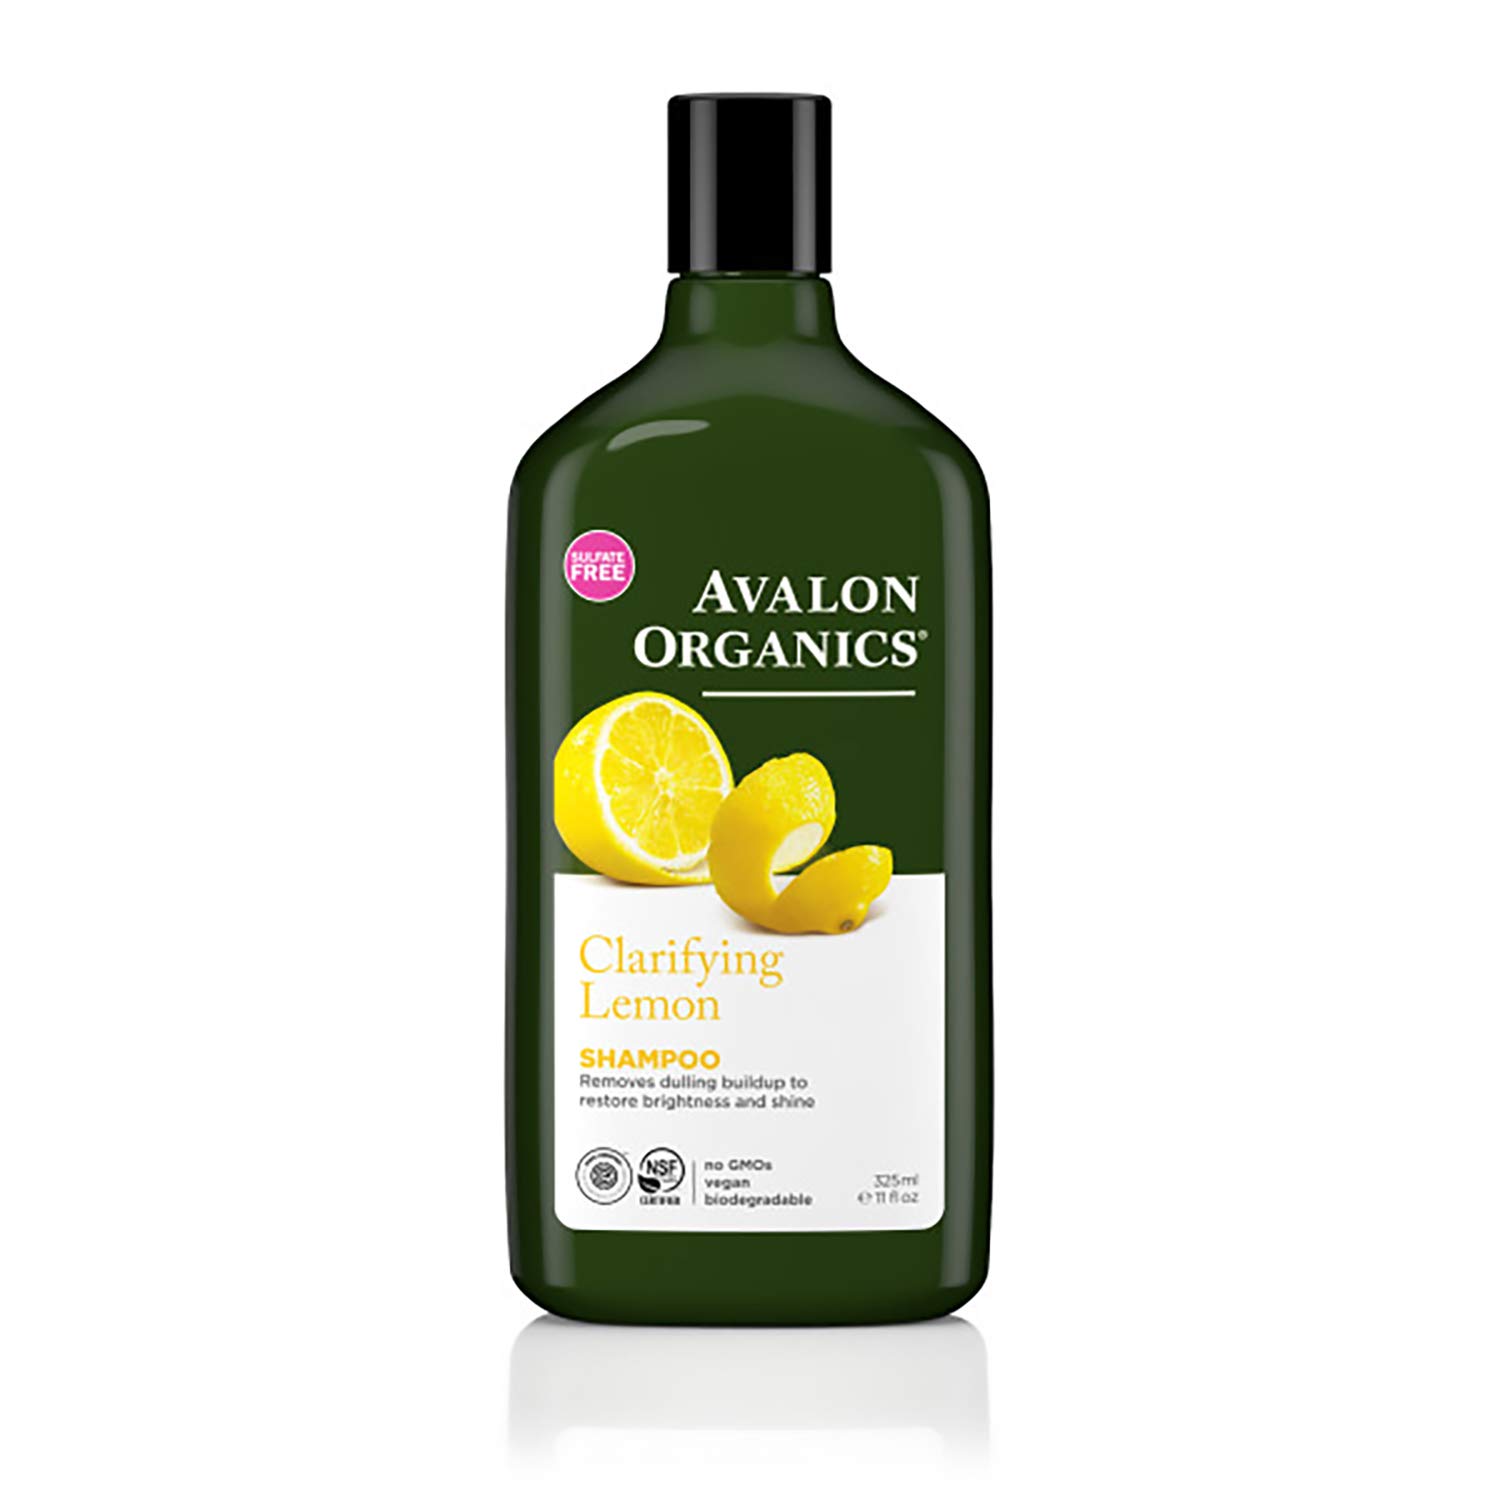 Avalon Organics Natural Clarifying Shampoo with Lemon